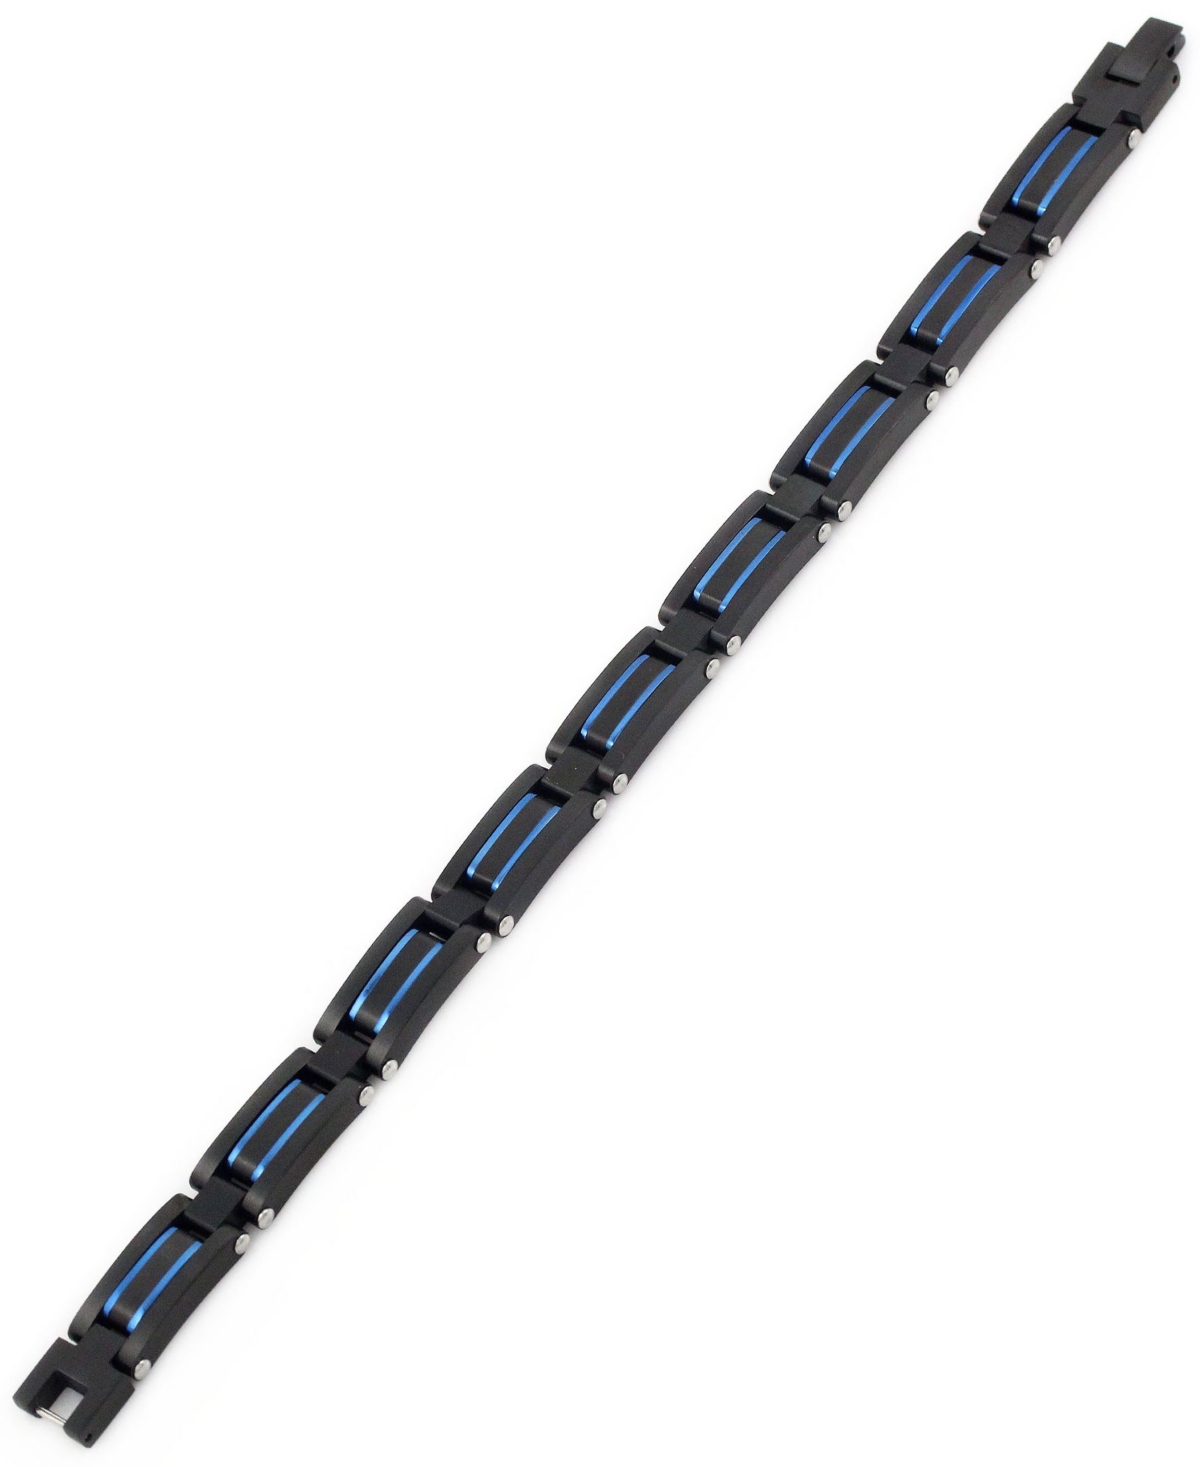 Sutton Stainless Steel Black and Blue Link Bracelet - Black